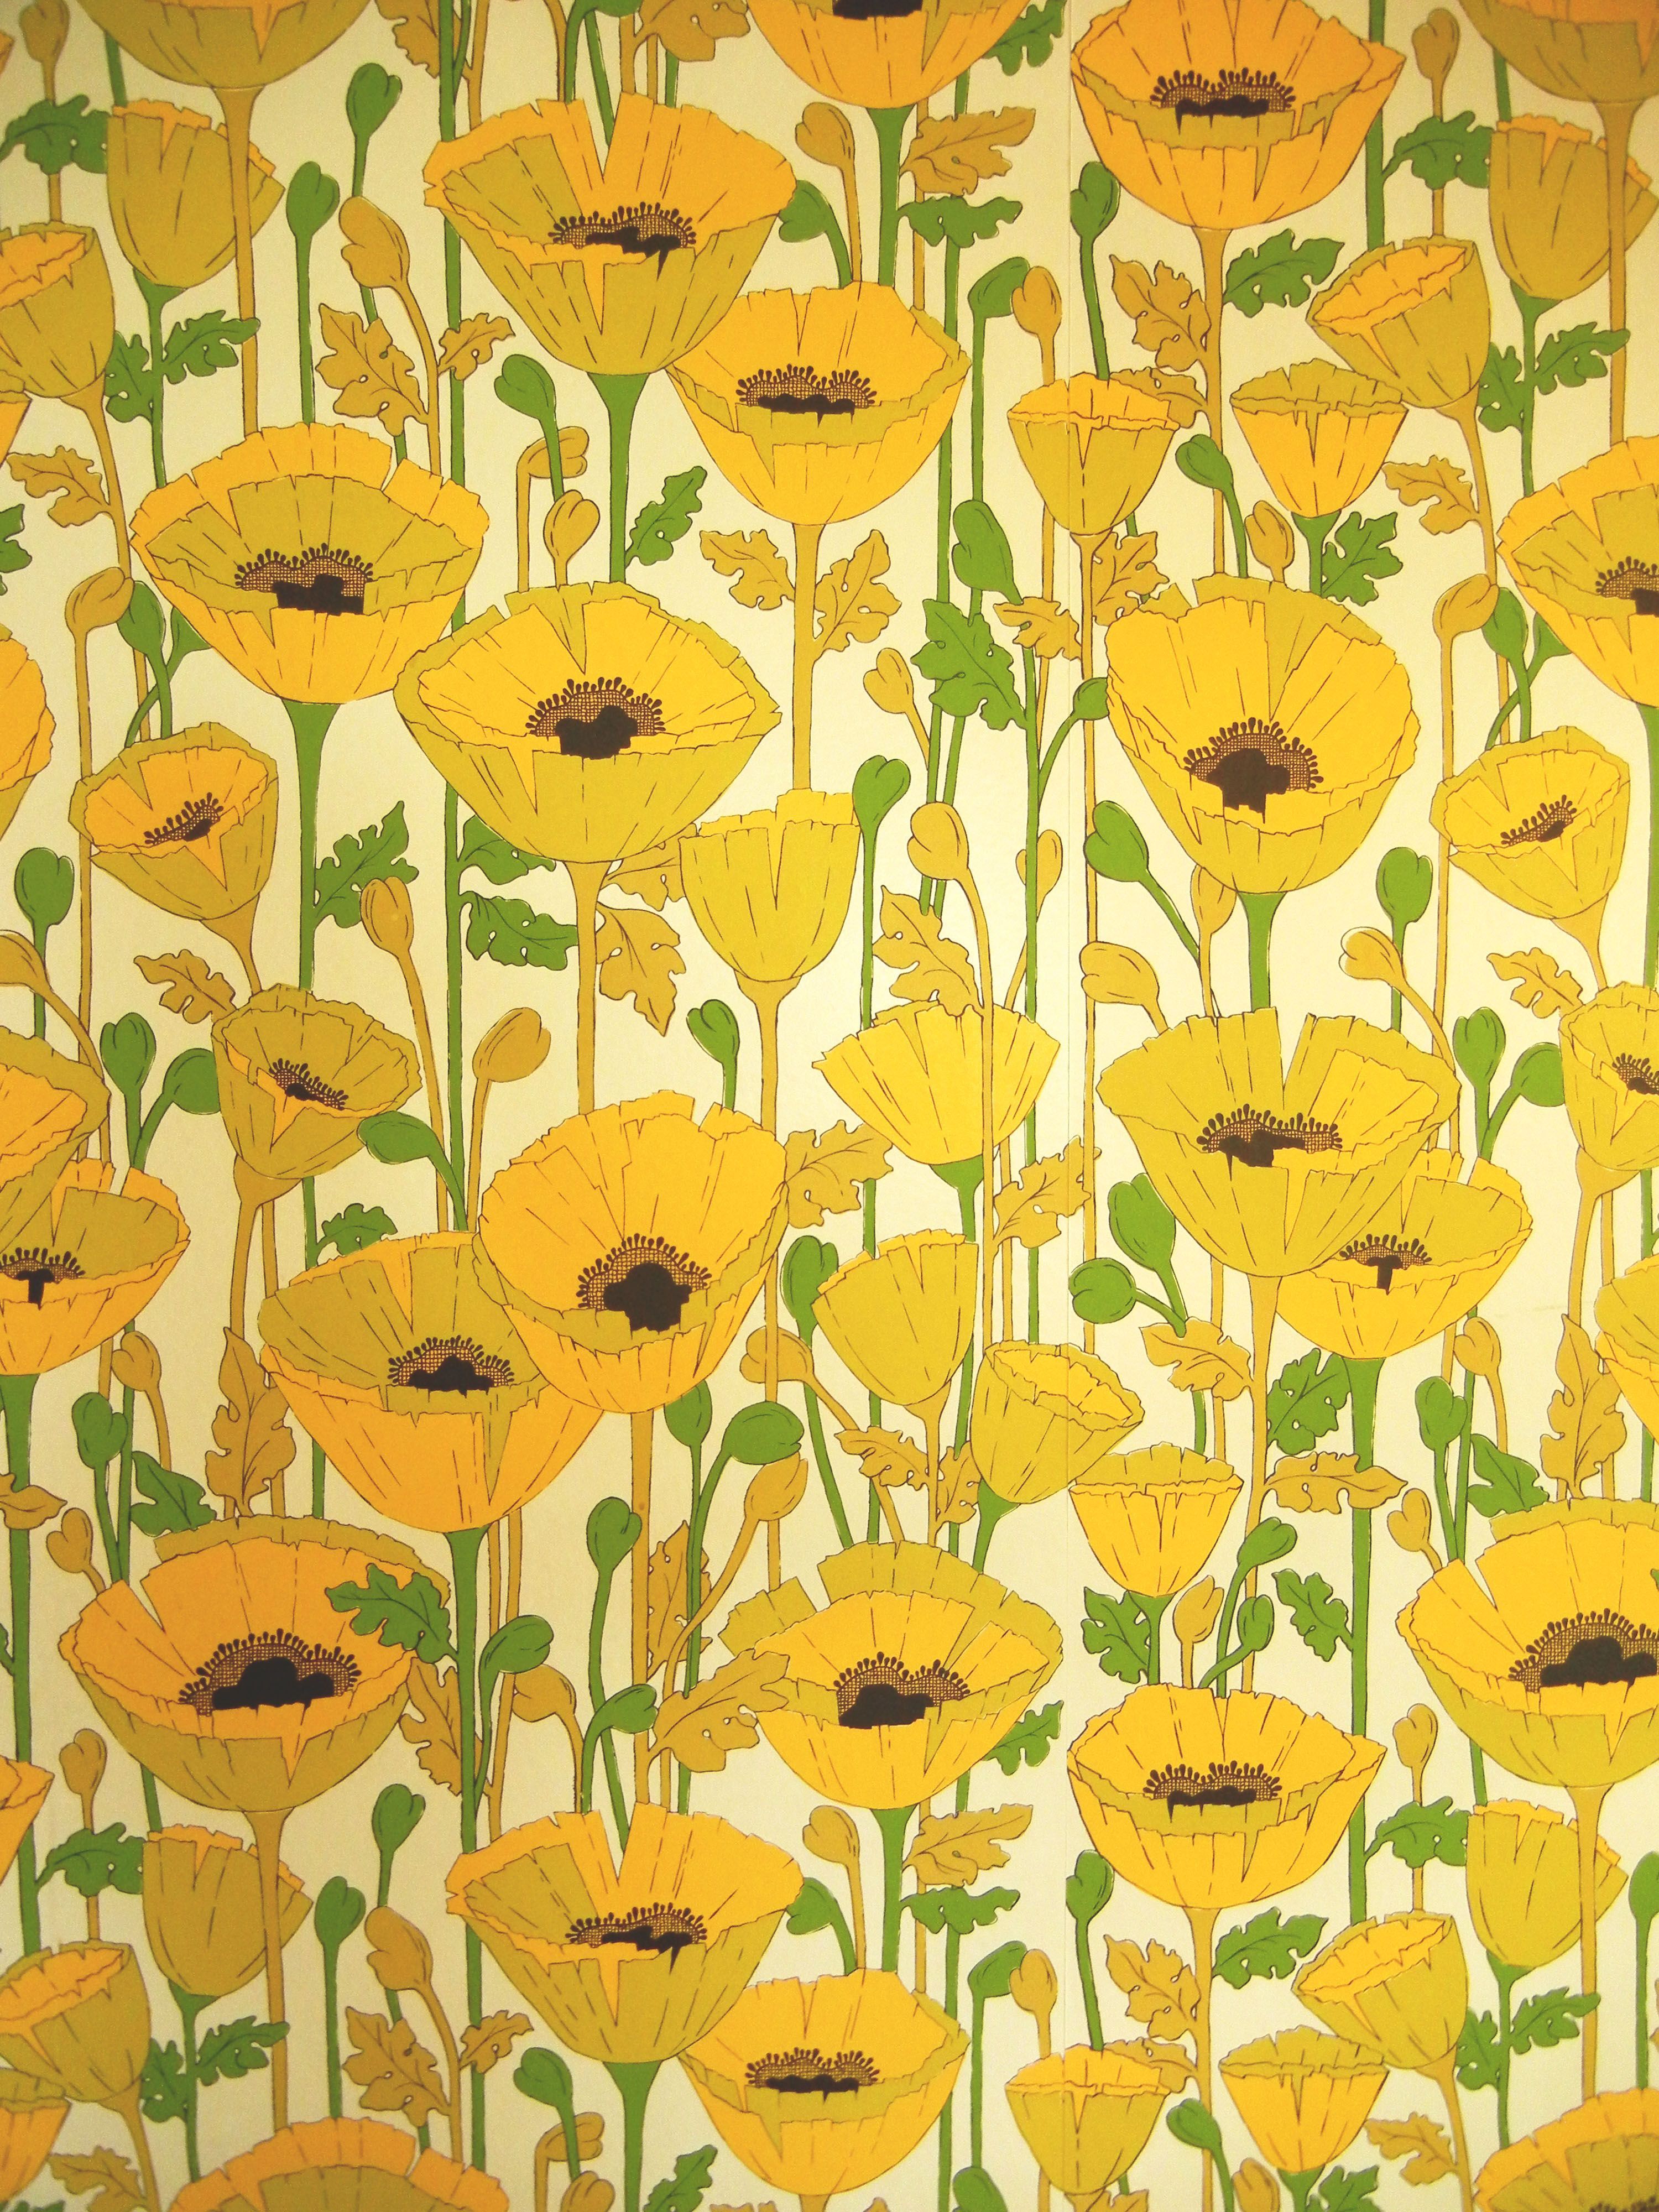 60's wallpaper wallpaper, Vintage patterns background, Hand painted wallpaper